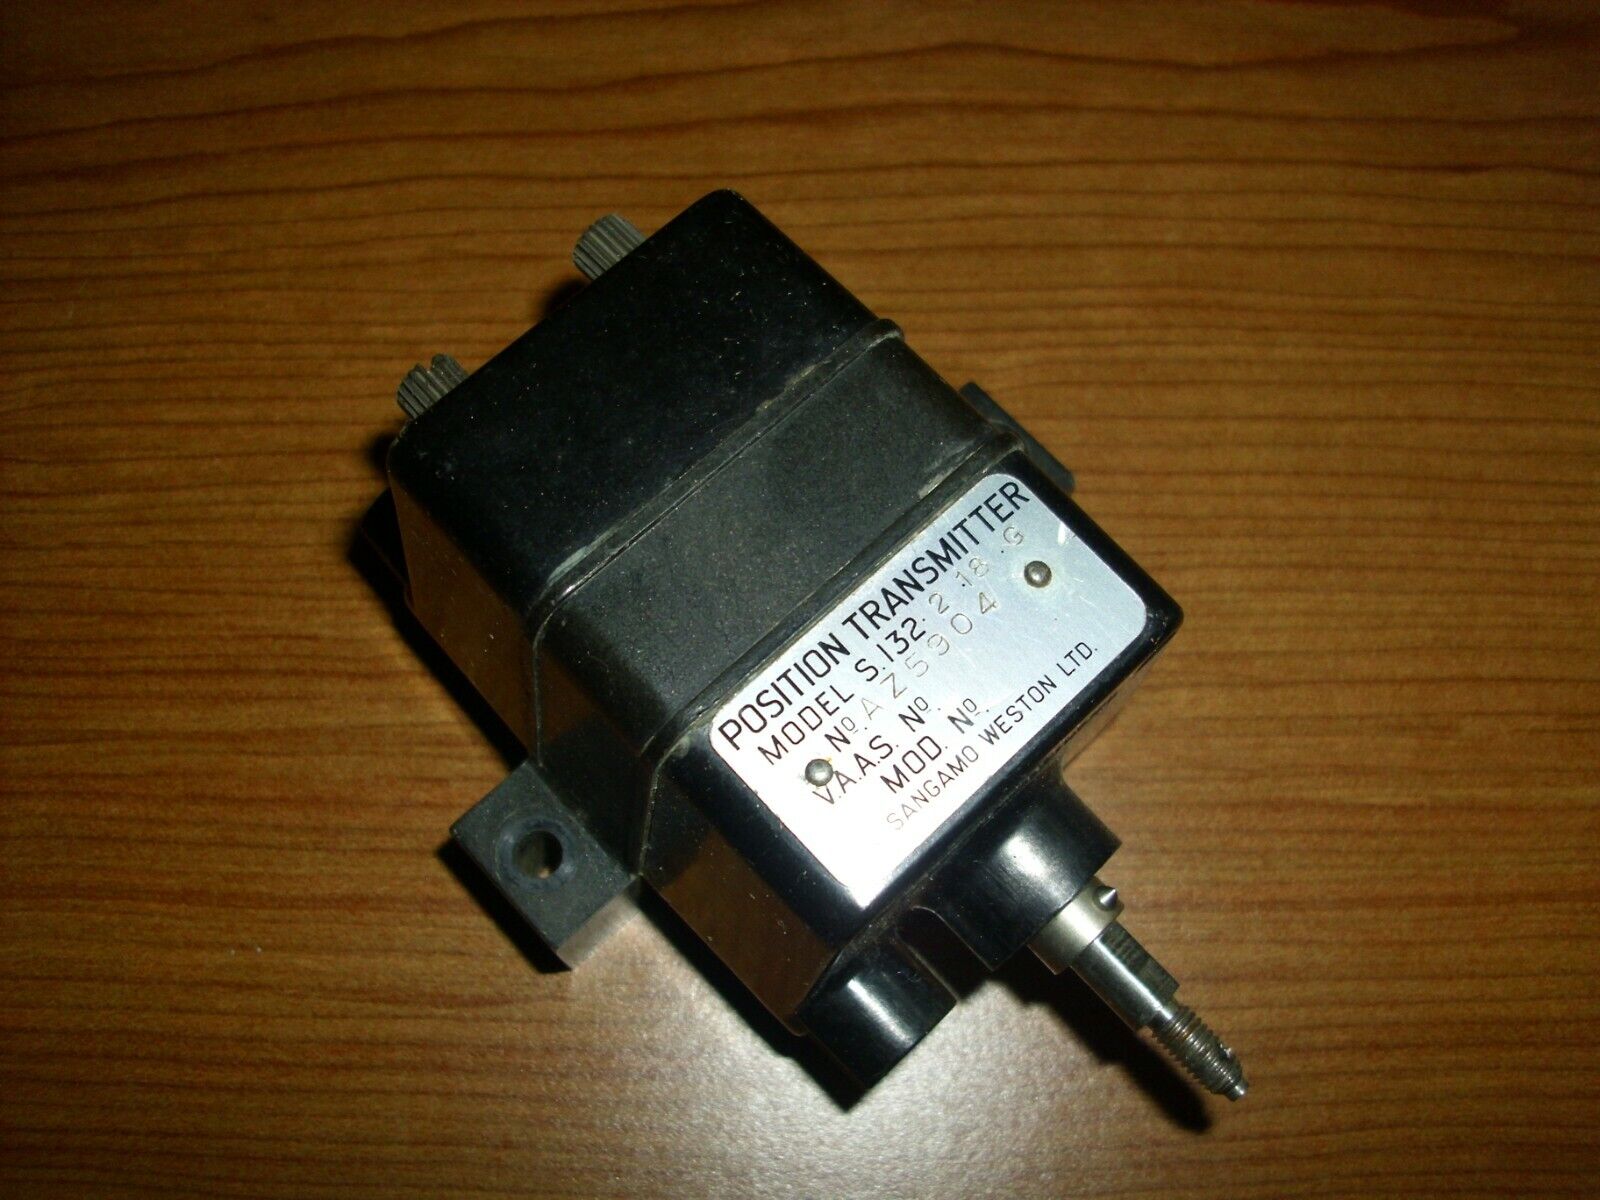 Sangamo Weston Position Transmitter model S132218G